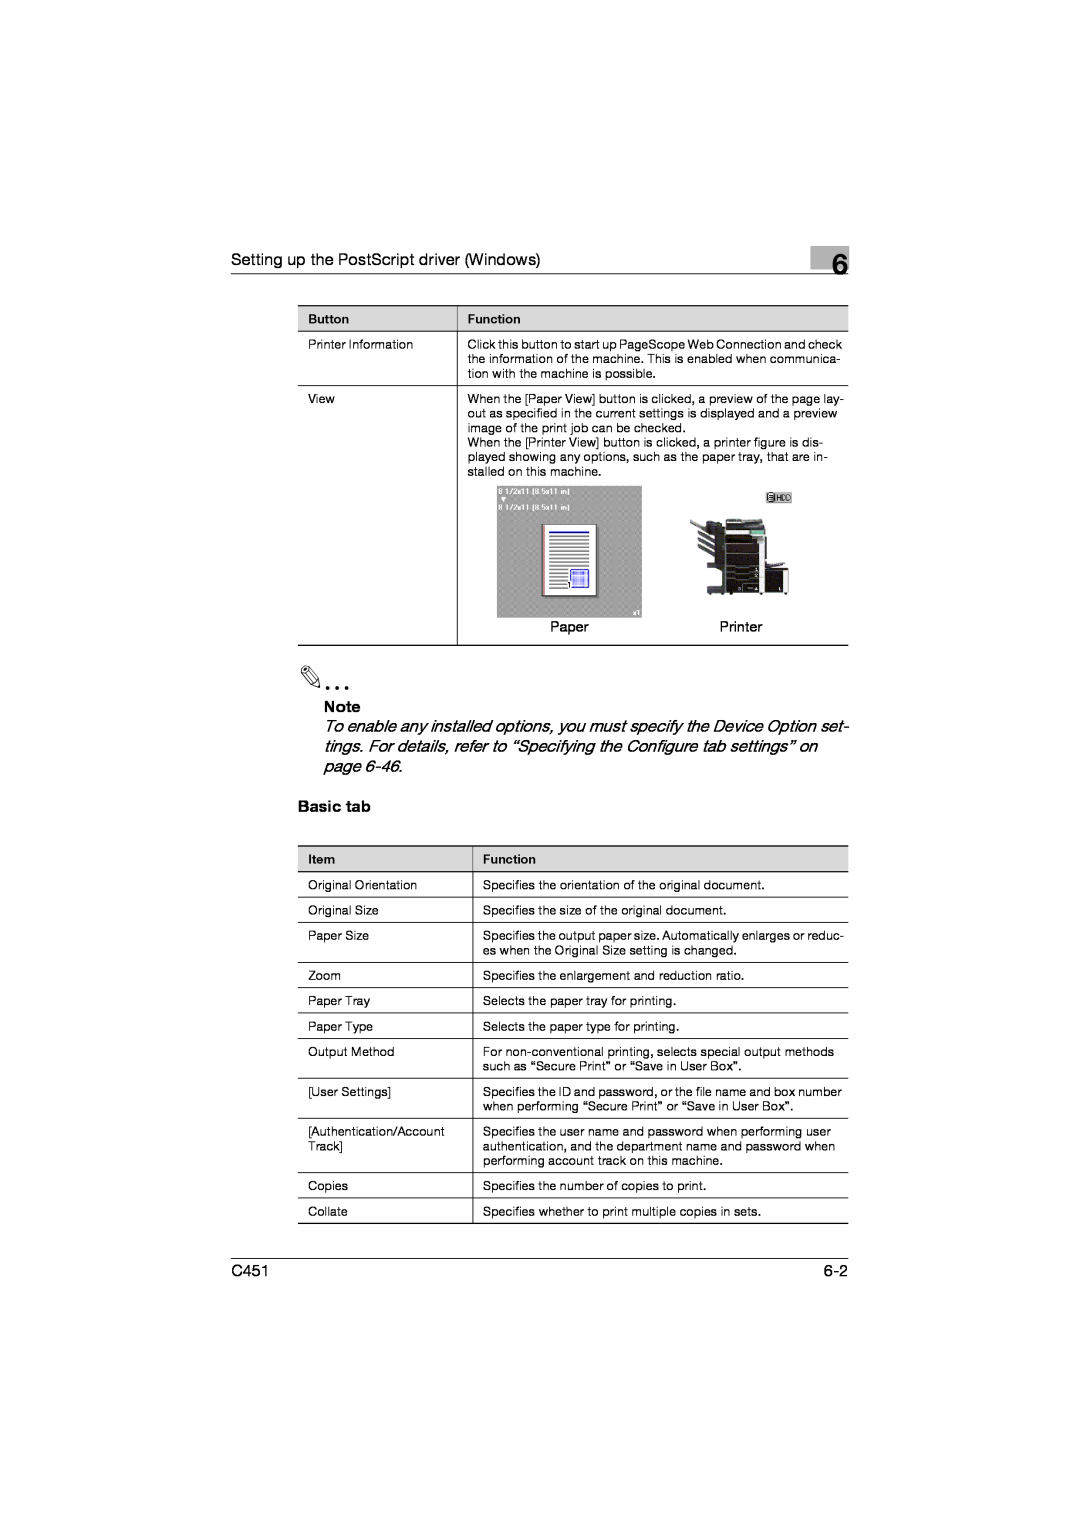 Konica Minolta C451 manual PaperPrinter, Printer Information 